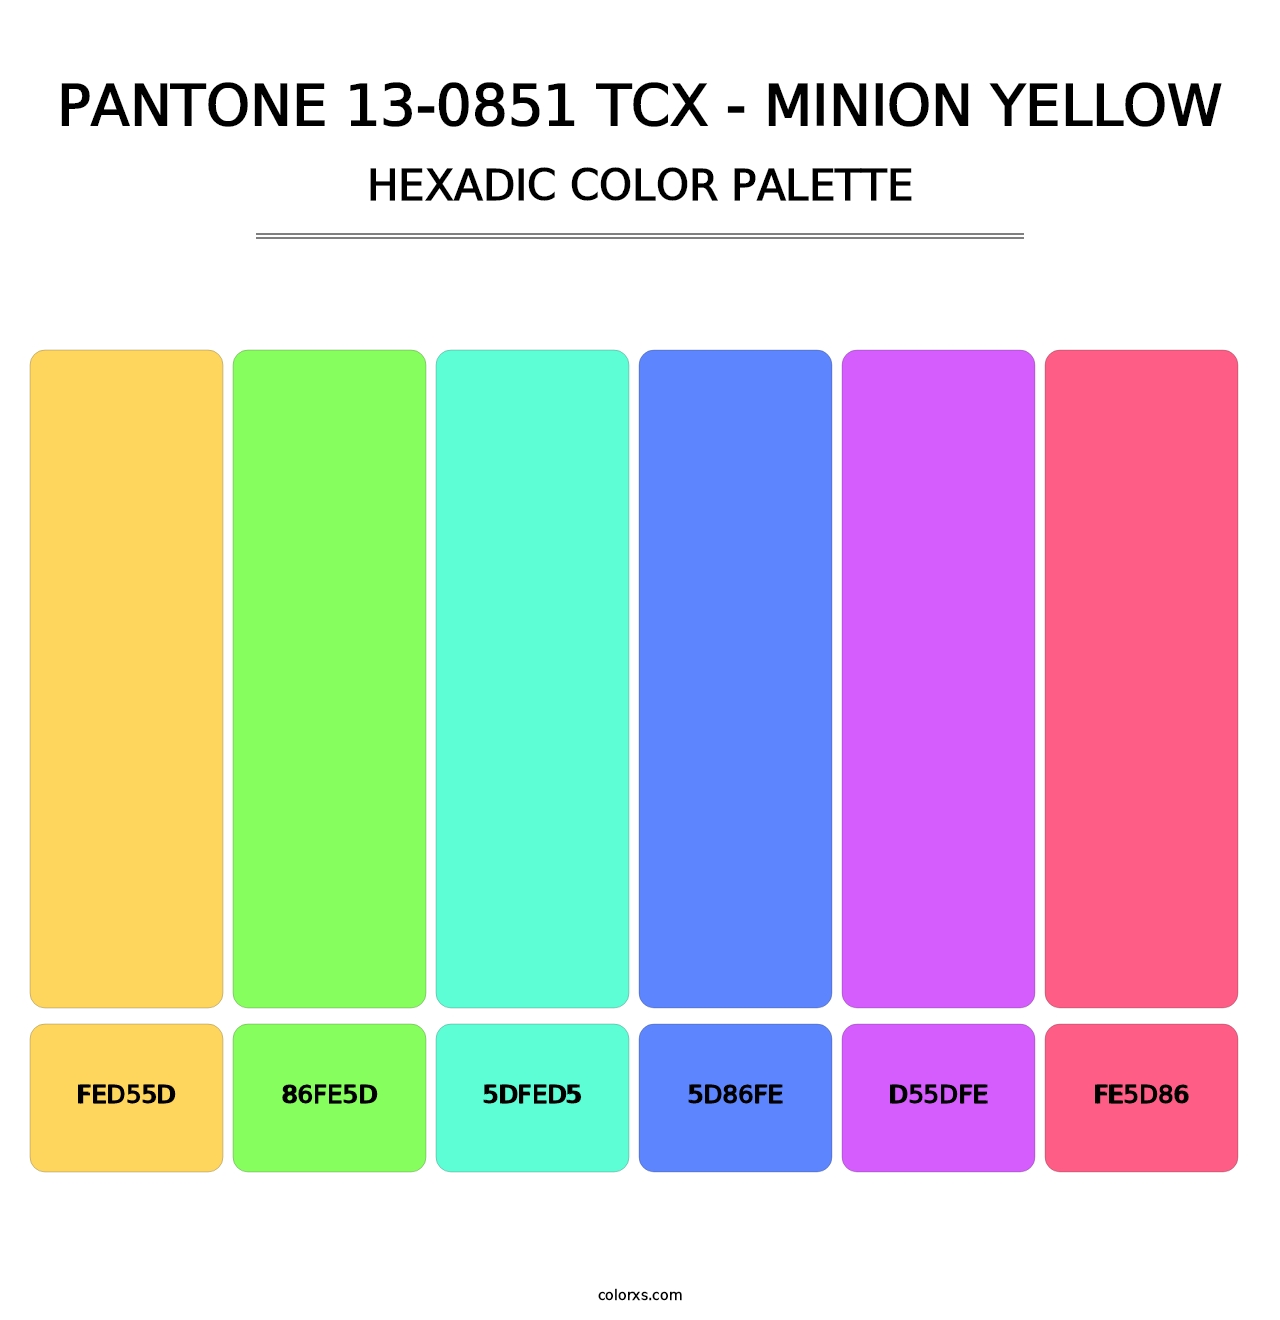 PANTONE 13-0851 TCX - Minion Yellow - Hexadic Color Palette